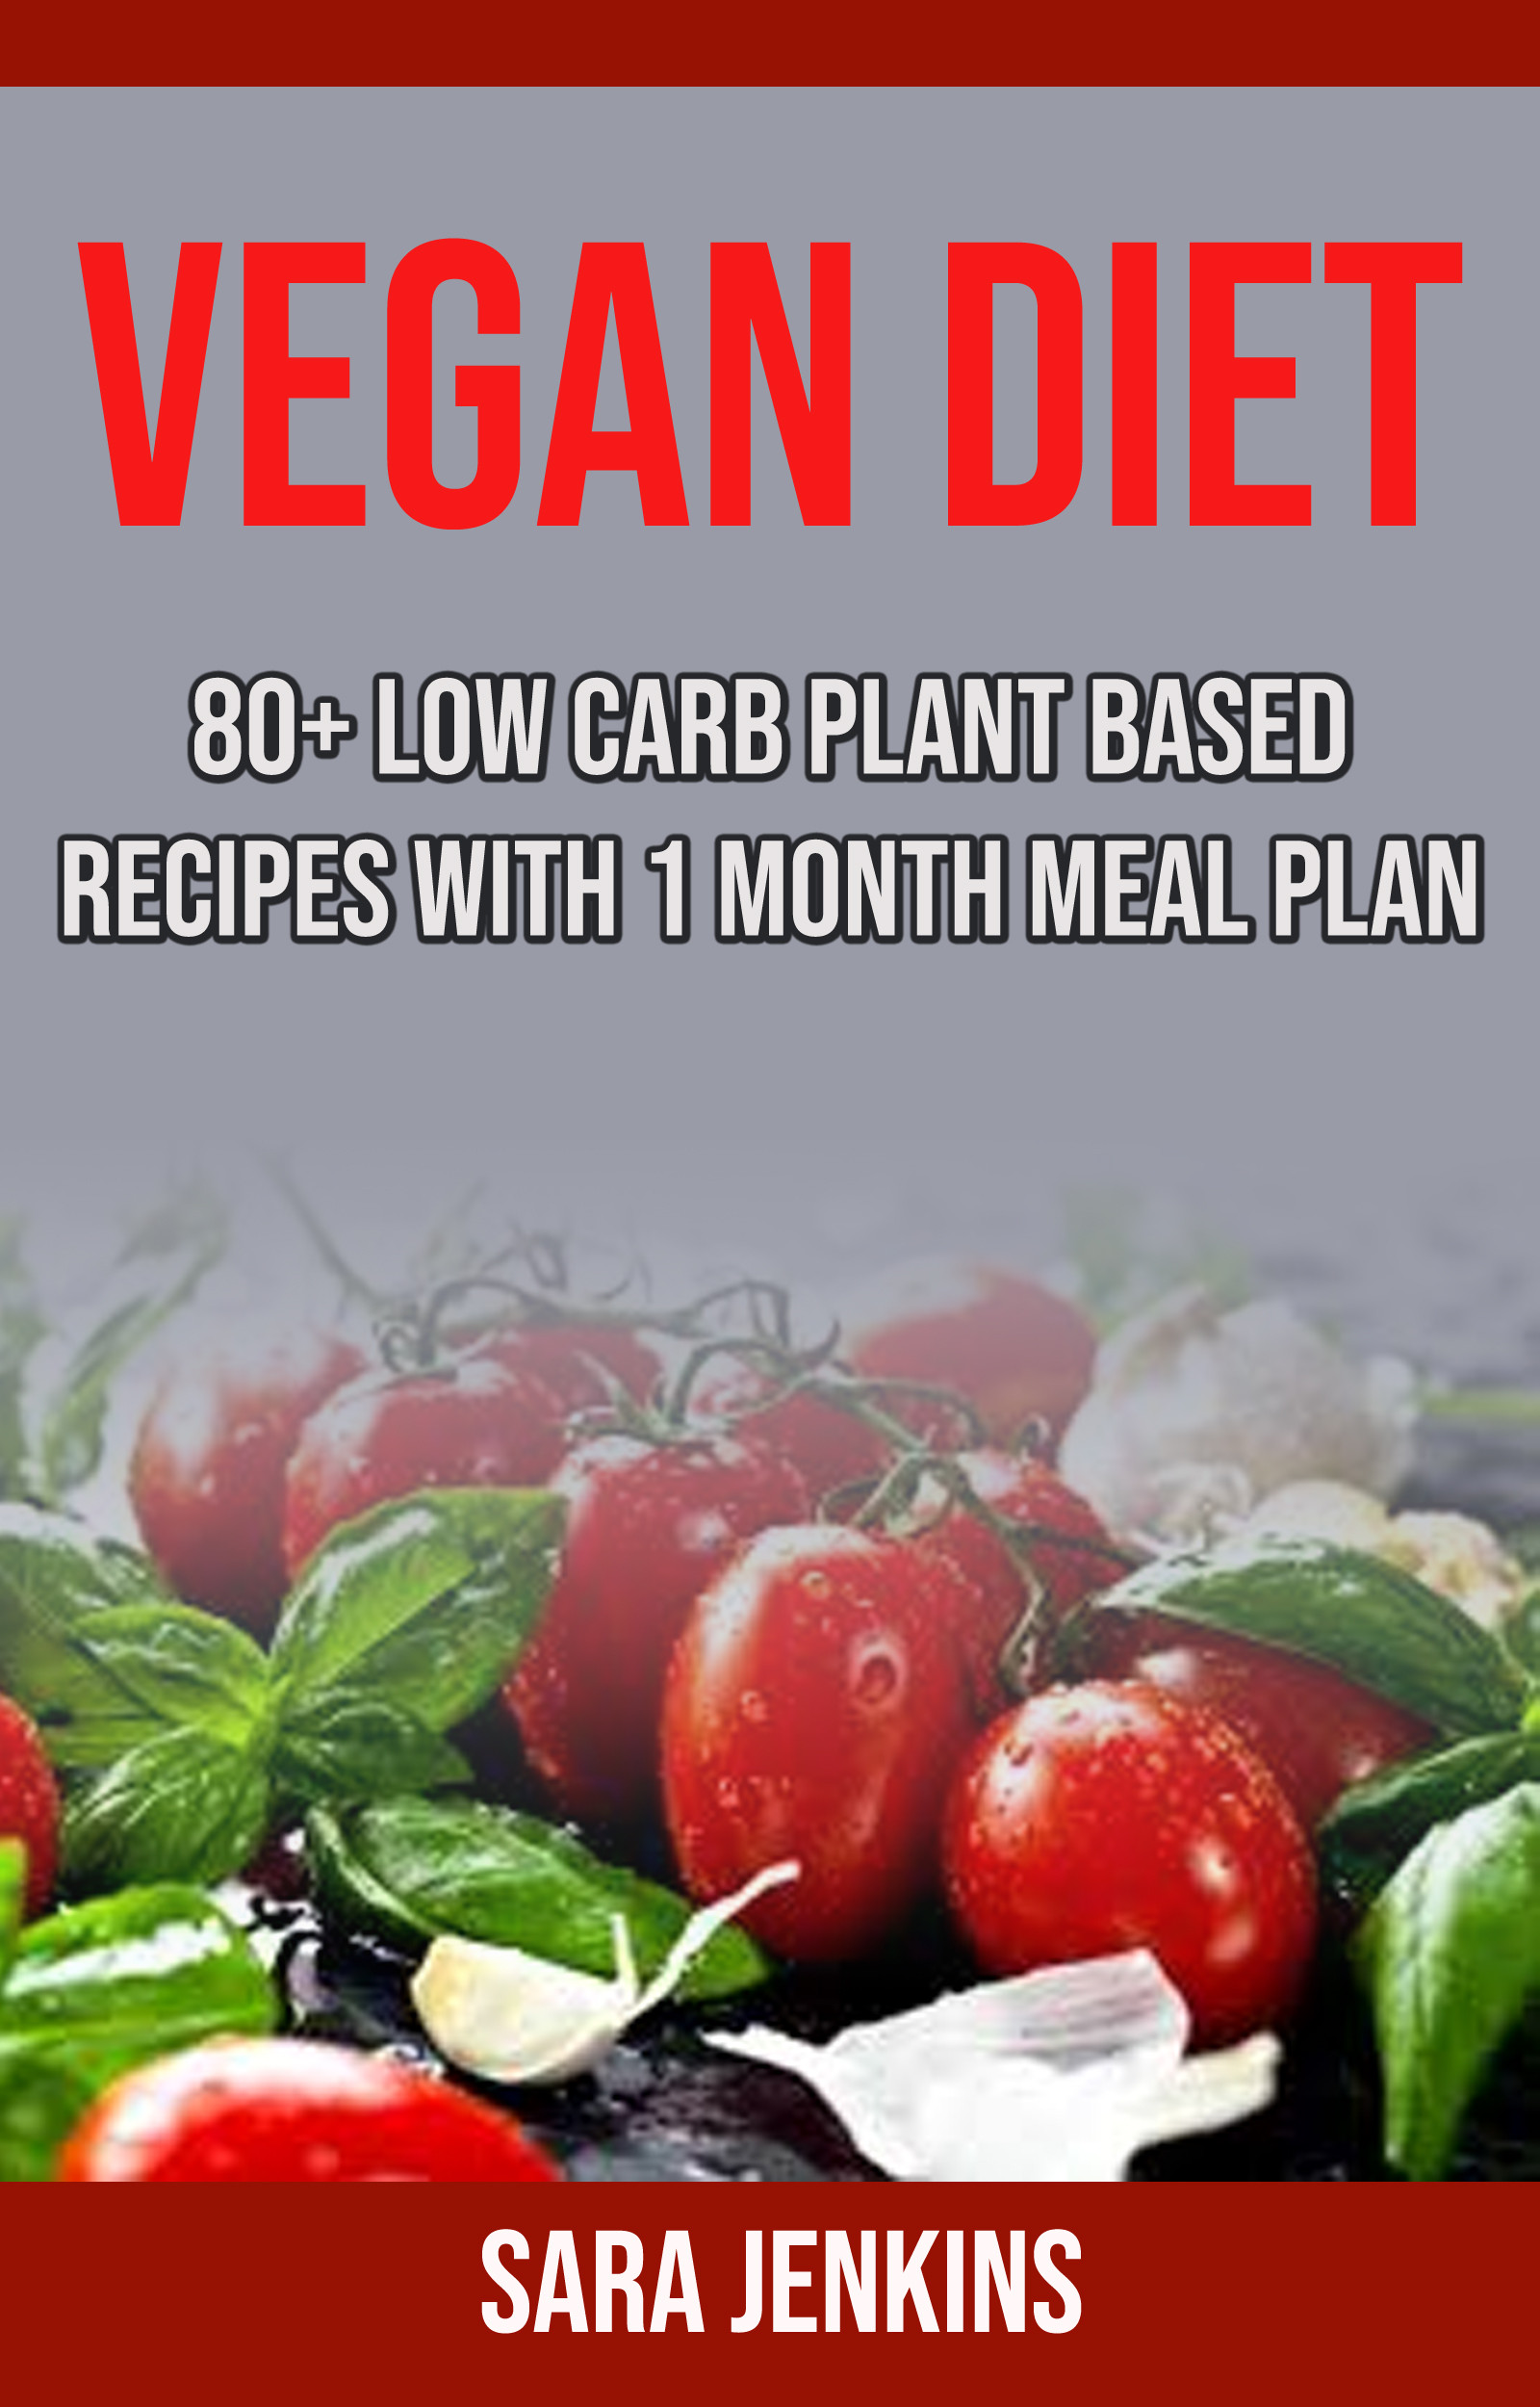 Low Carb Plant Based Diet
 Babelcube – Vegan t 80 low carb plant based recipes